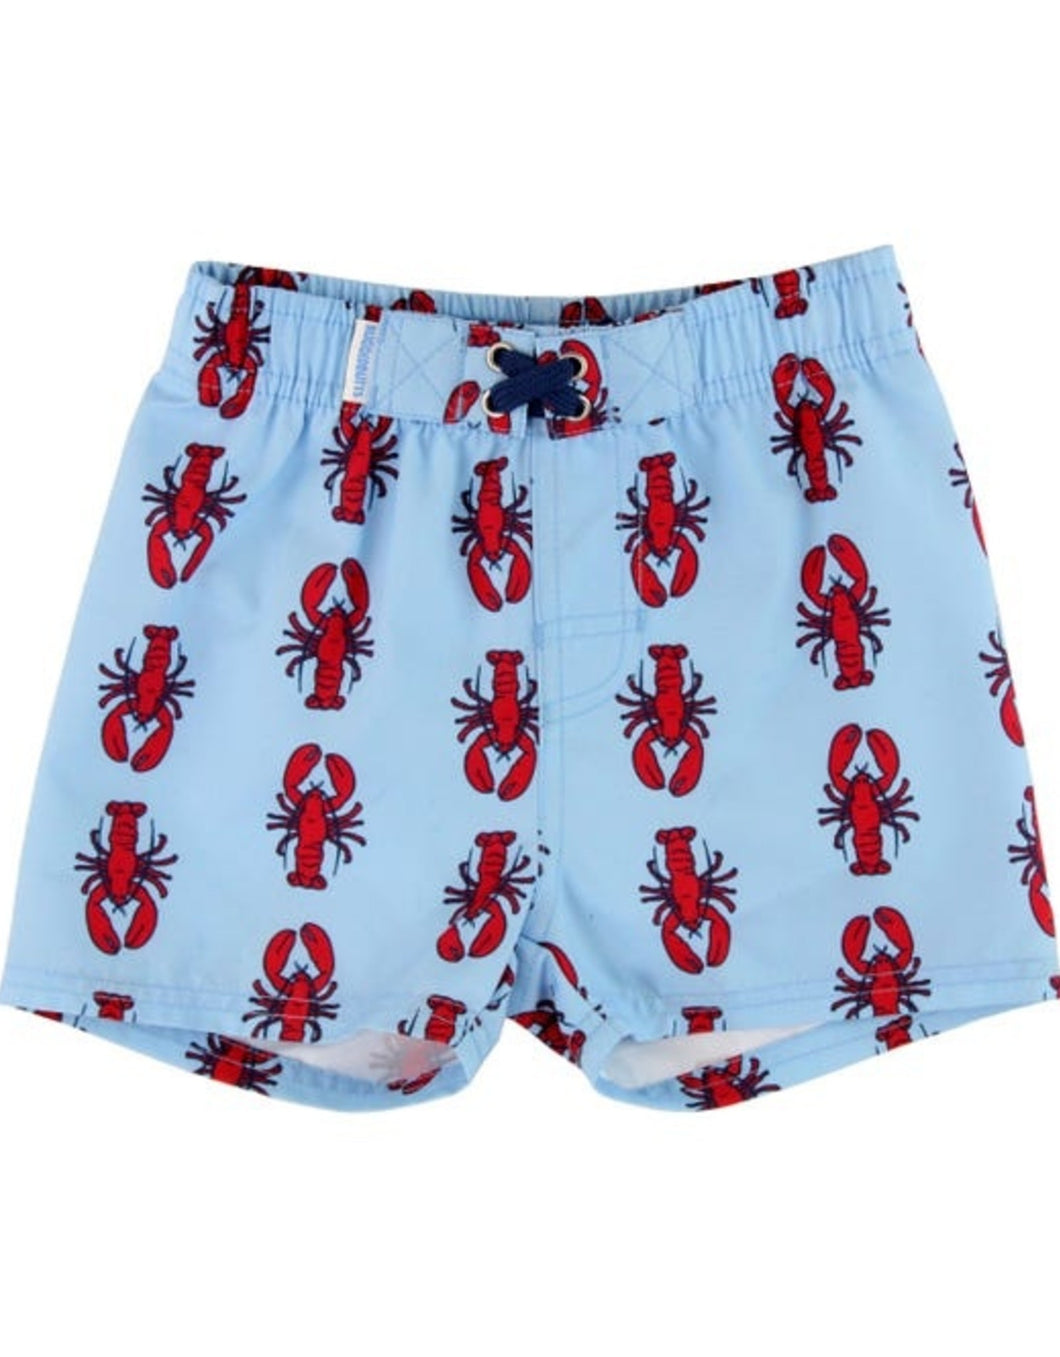 Lobster Swim Trunks by Ruggedbutts